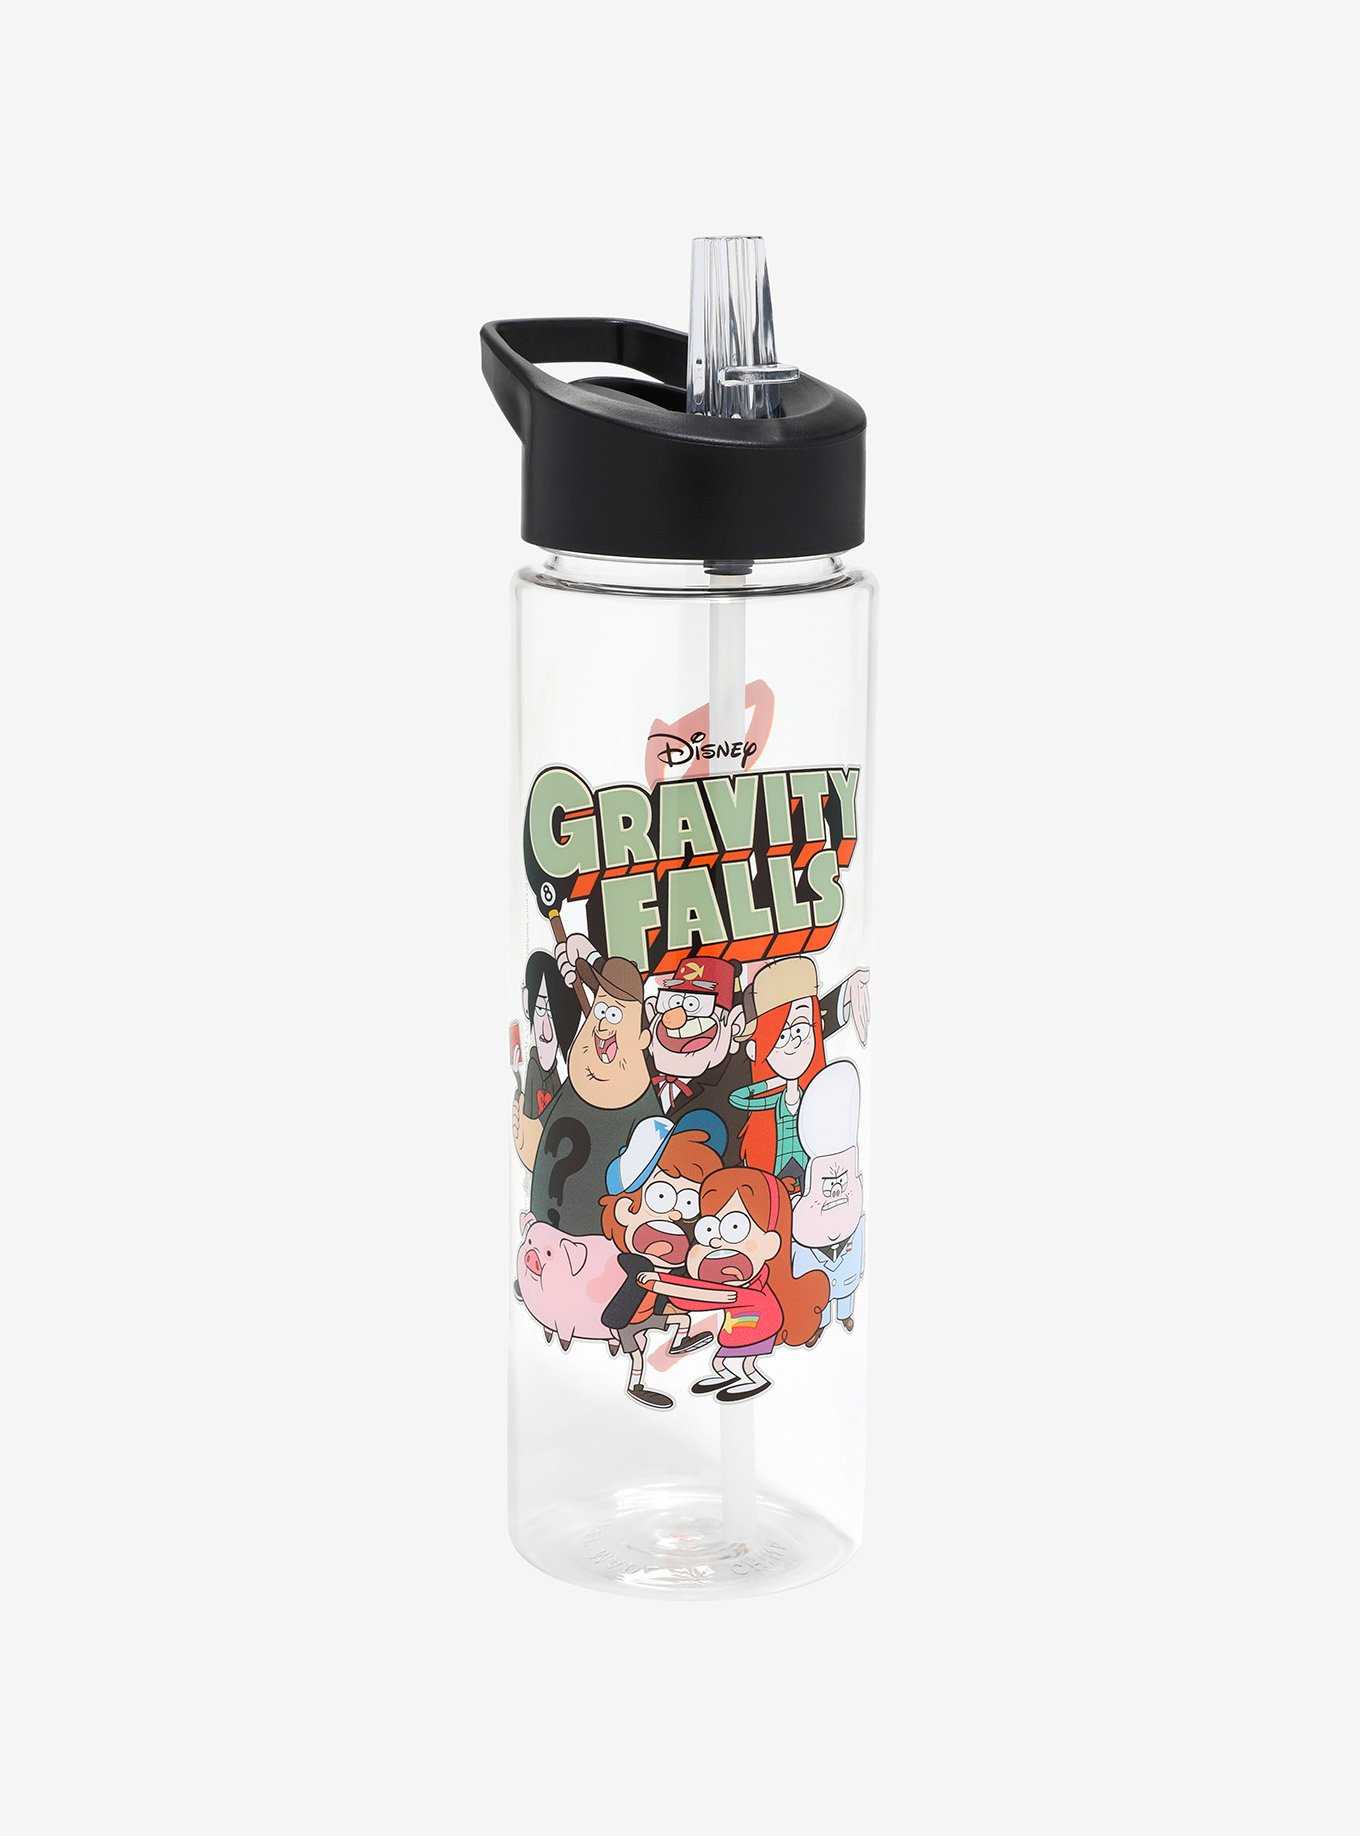 OFFICIAL Gravity Falls Merch & Gifts